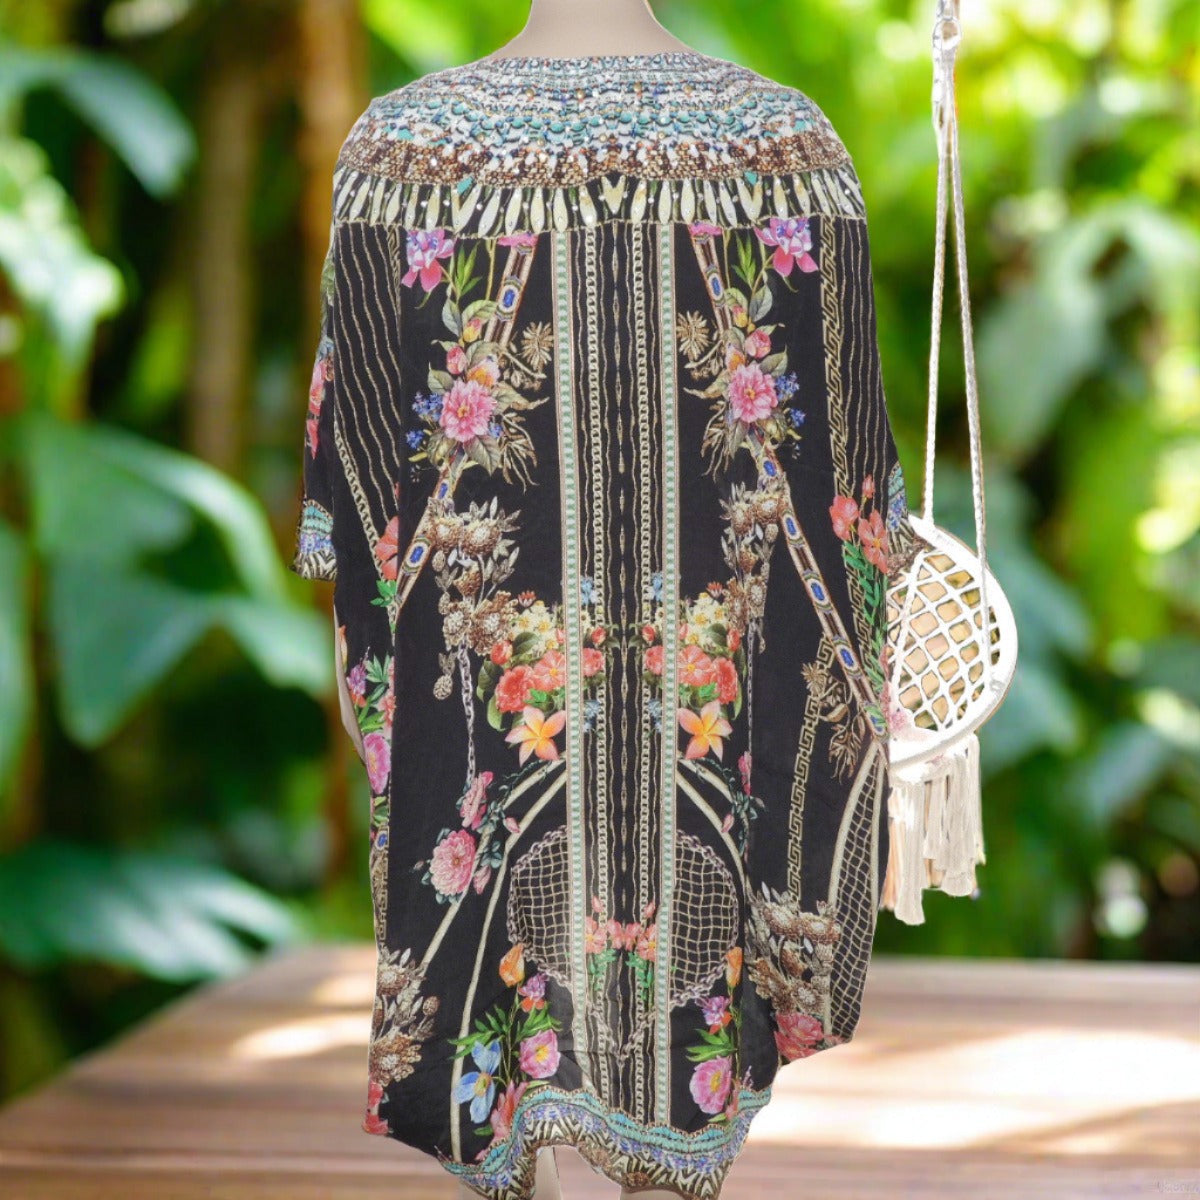 Capri Batwing Silk Embellished Hi-low Kaftan/Top by Fashion Spectrum at Kaftans that Bling